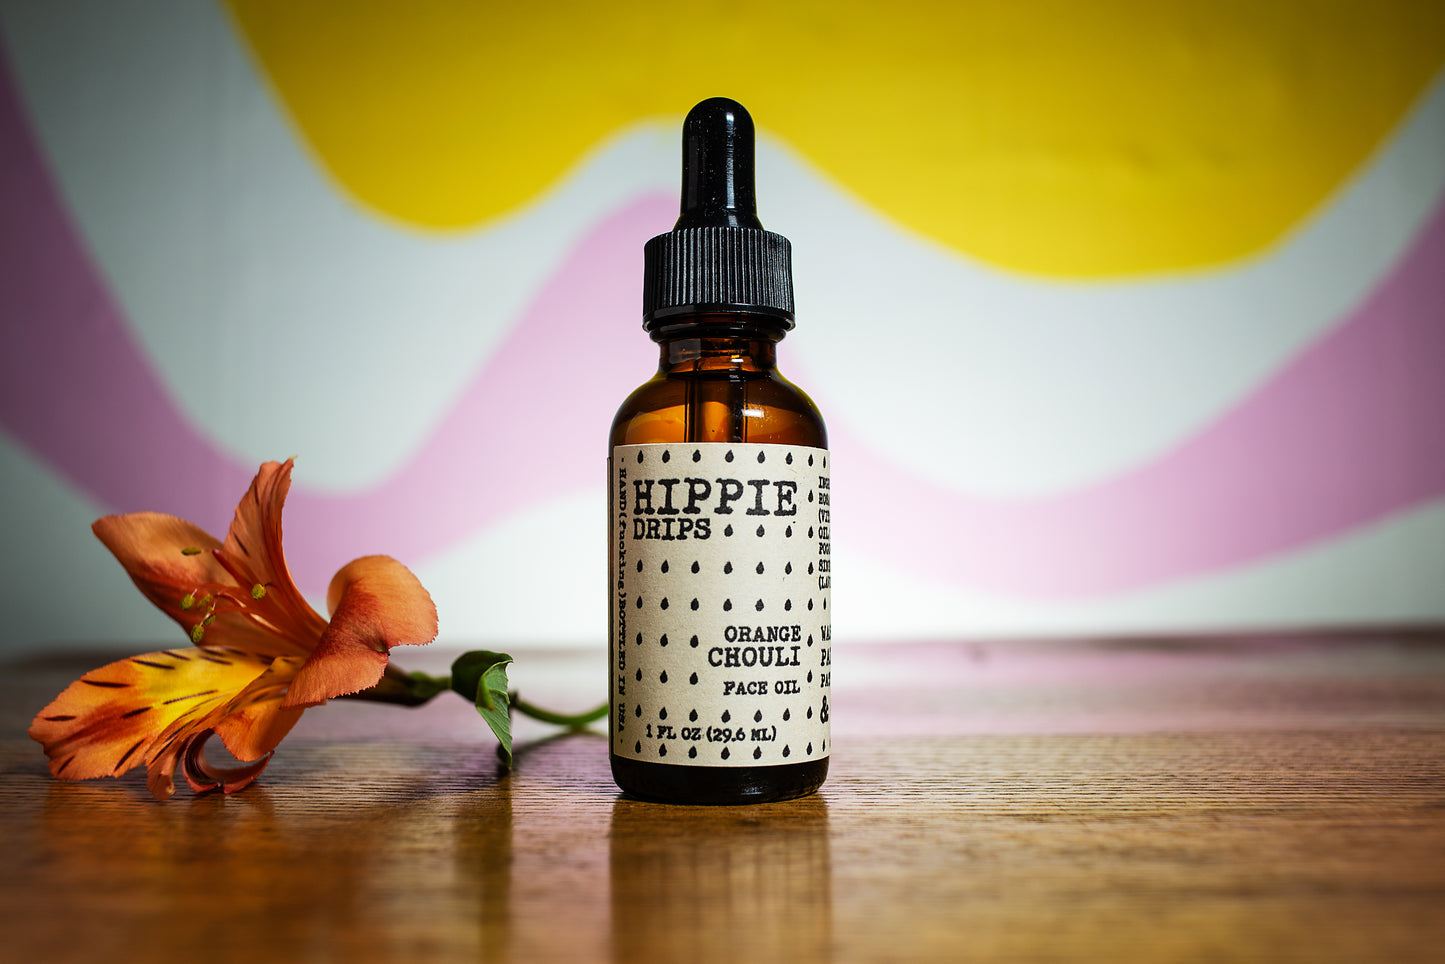 Hippie Drips Orange Chouli Face Oil